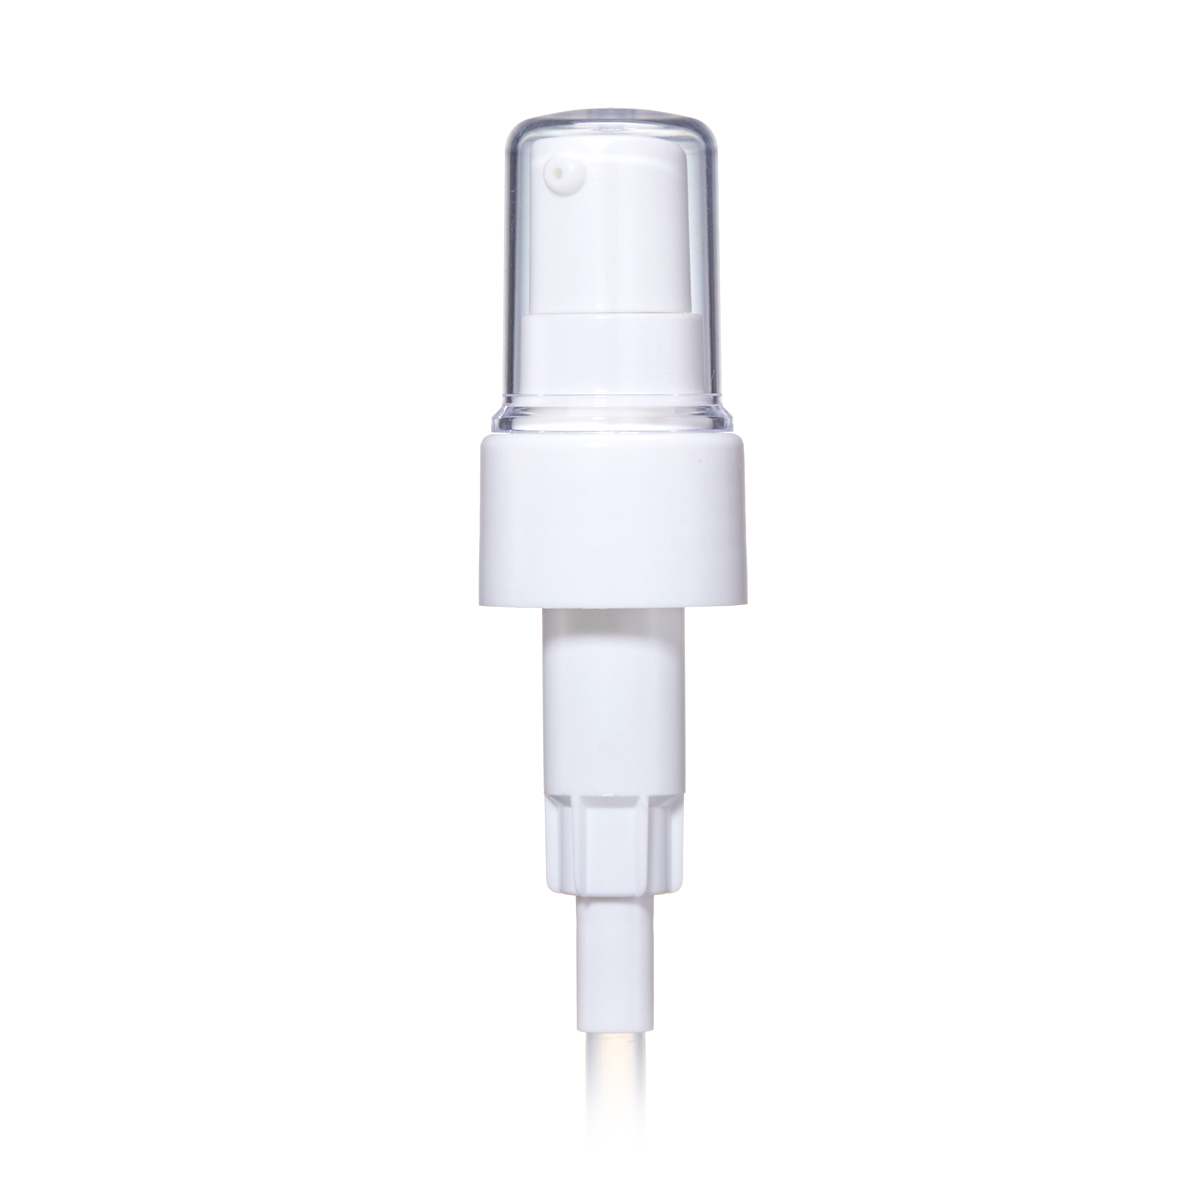 Dispenser Pump for Cosmetics (0.8cc) Manufacturer